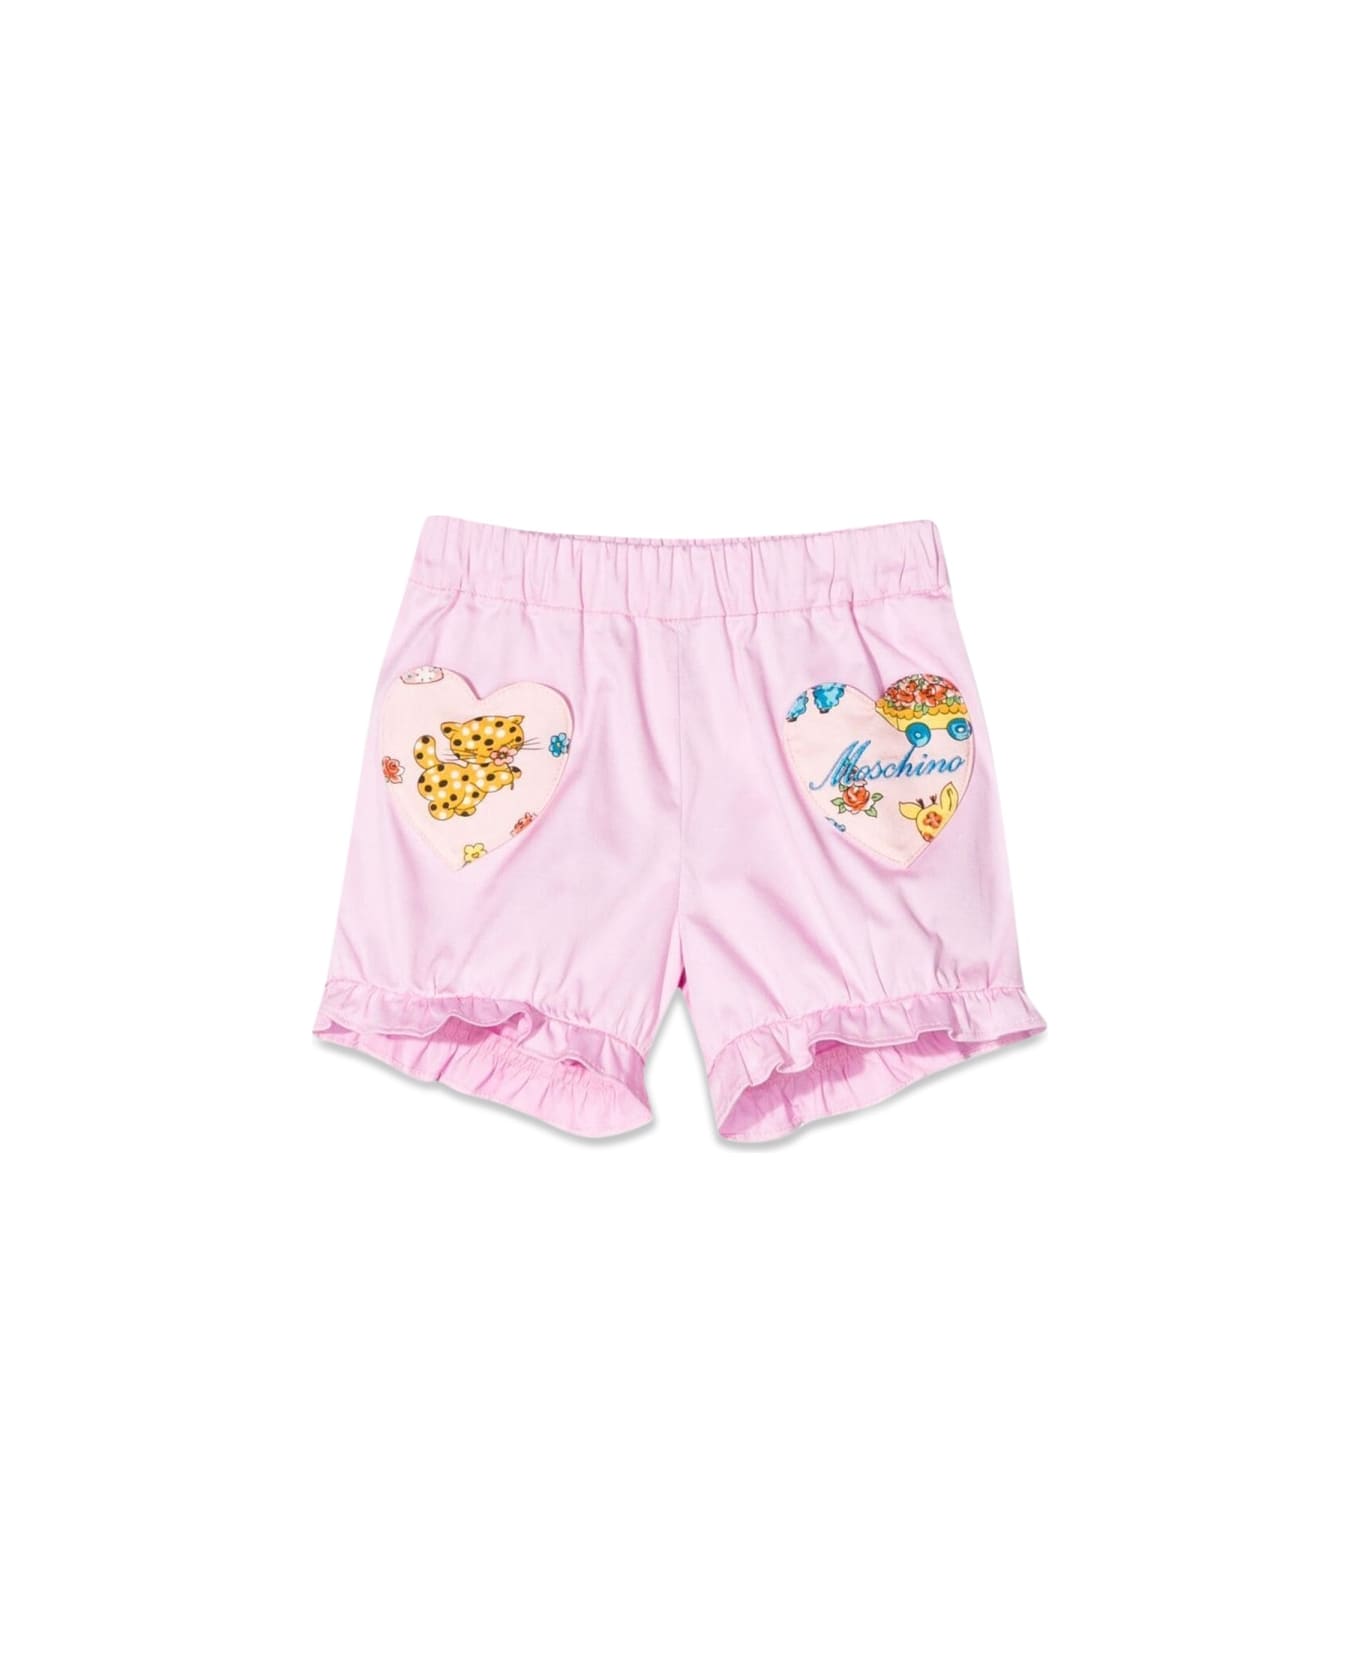 Moschino Shorts - PINK